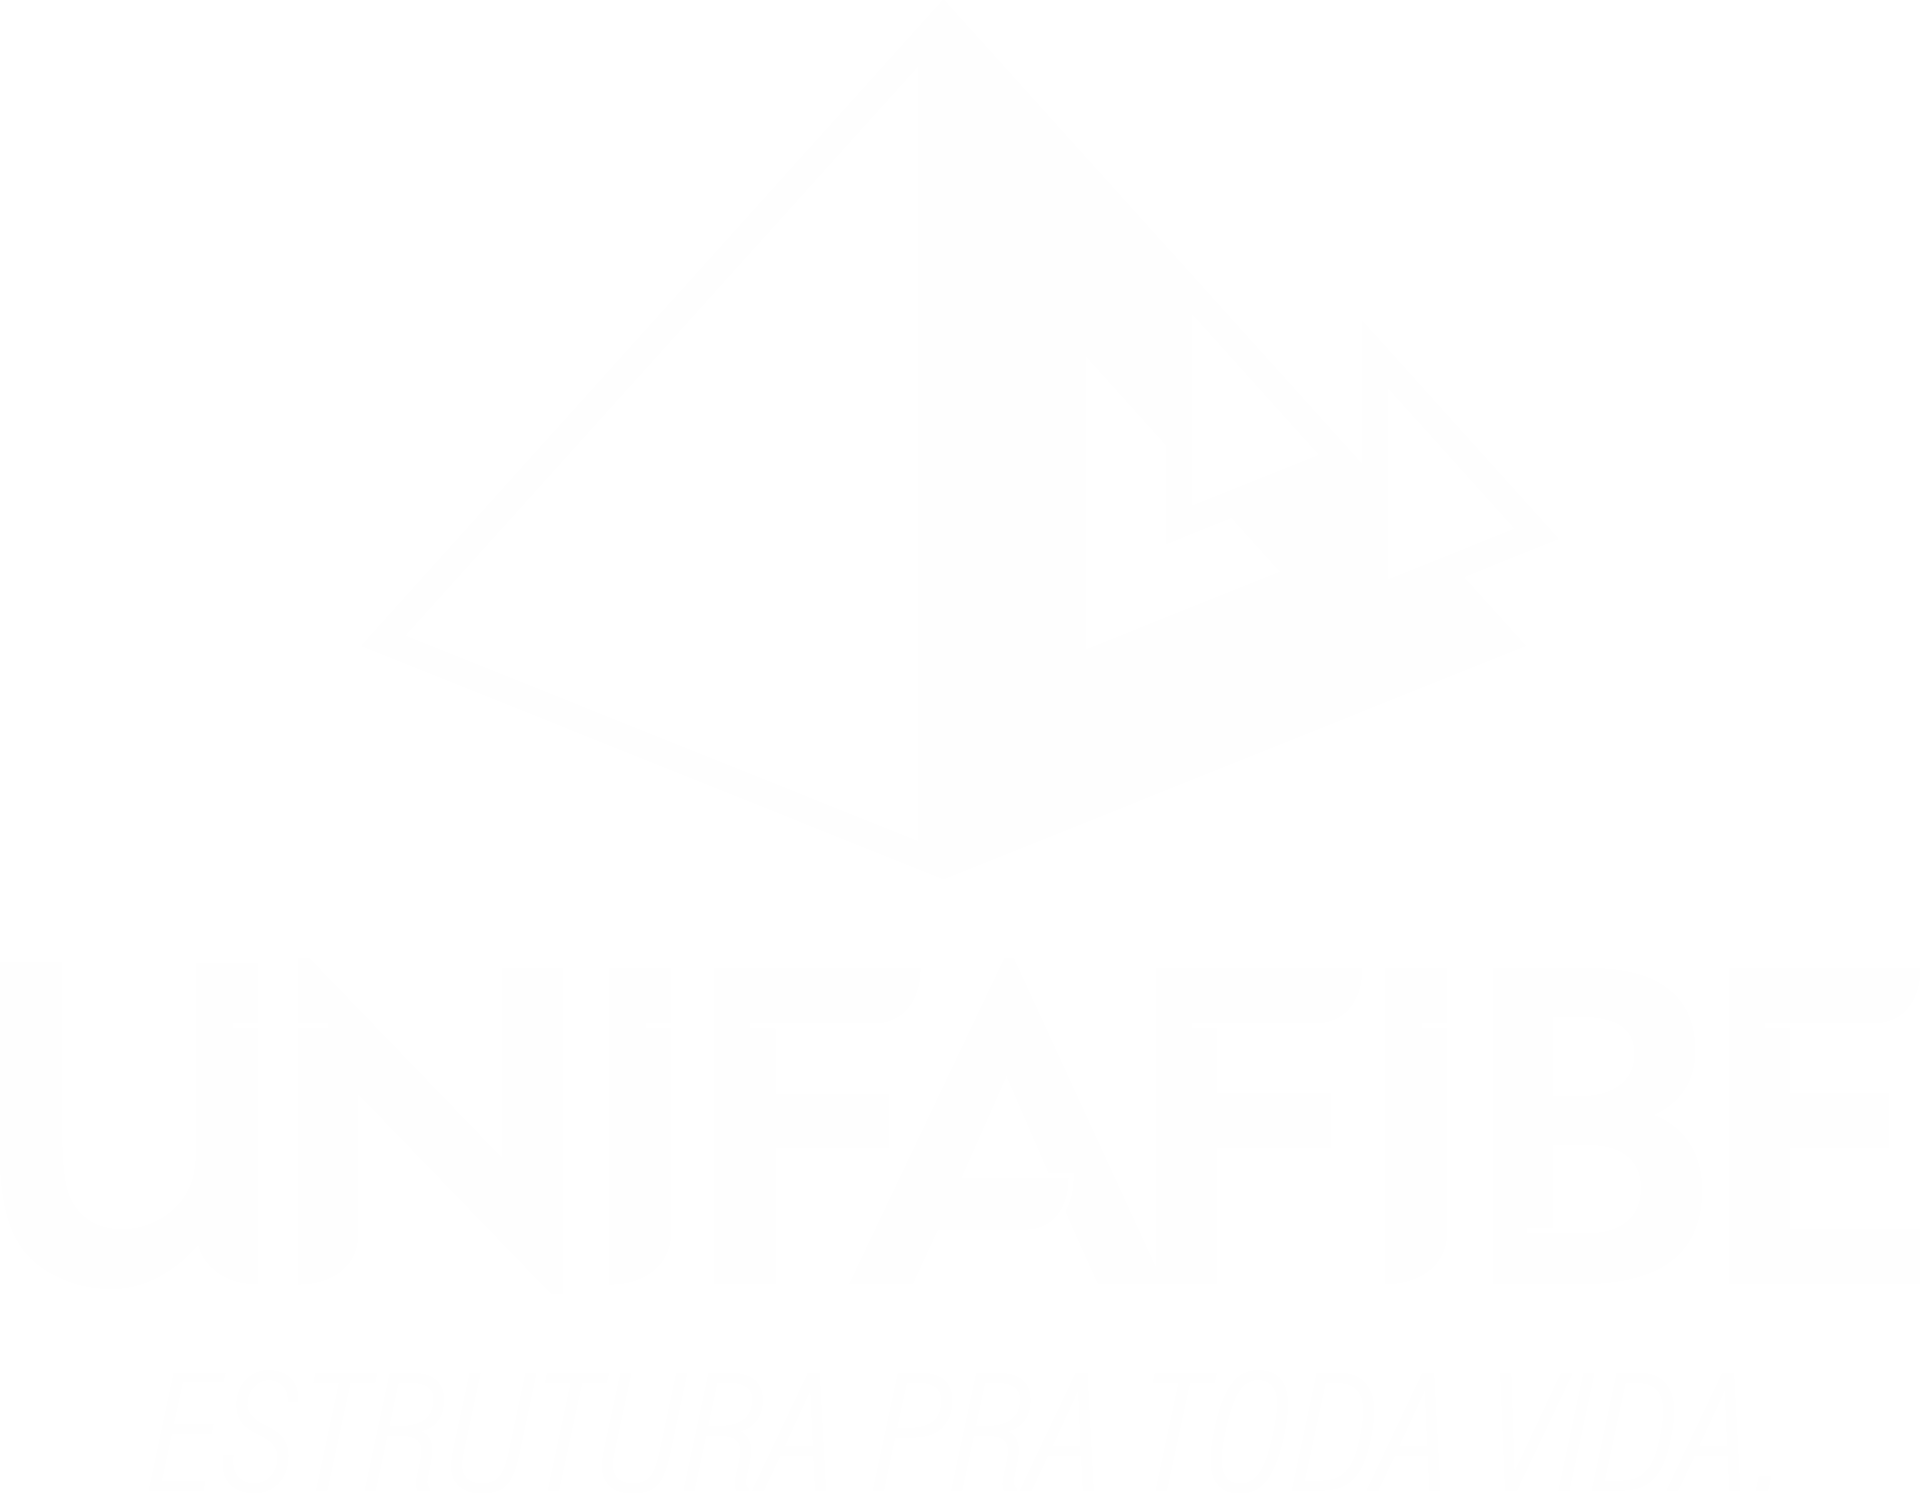 Unifafibe